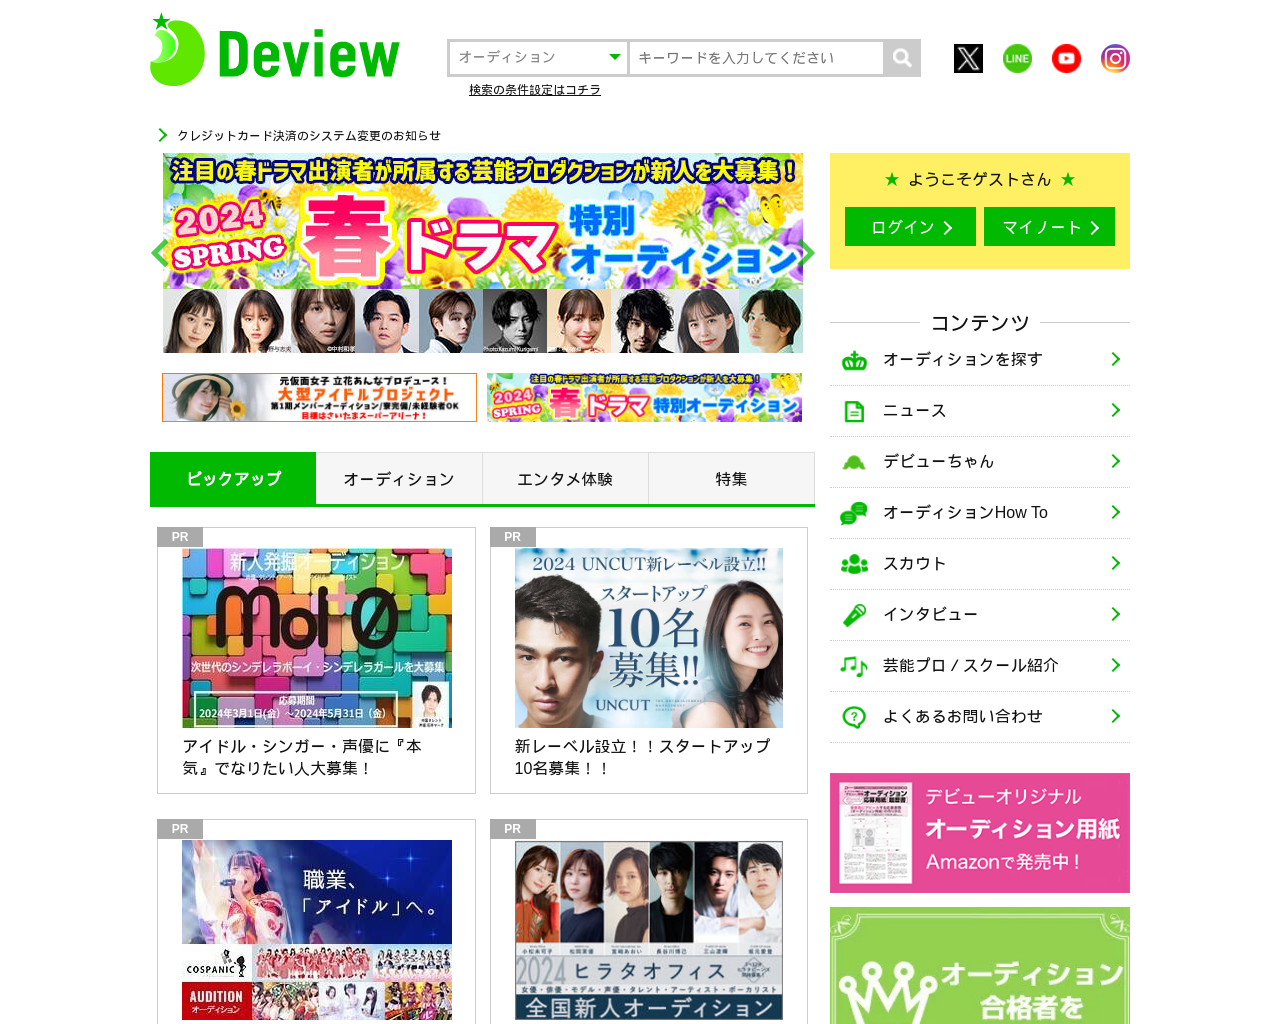 deview.co.jp